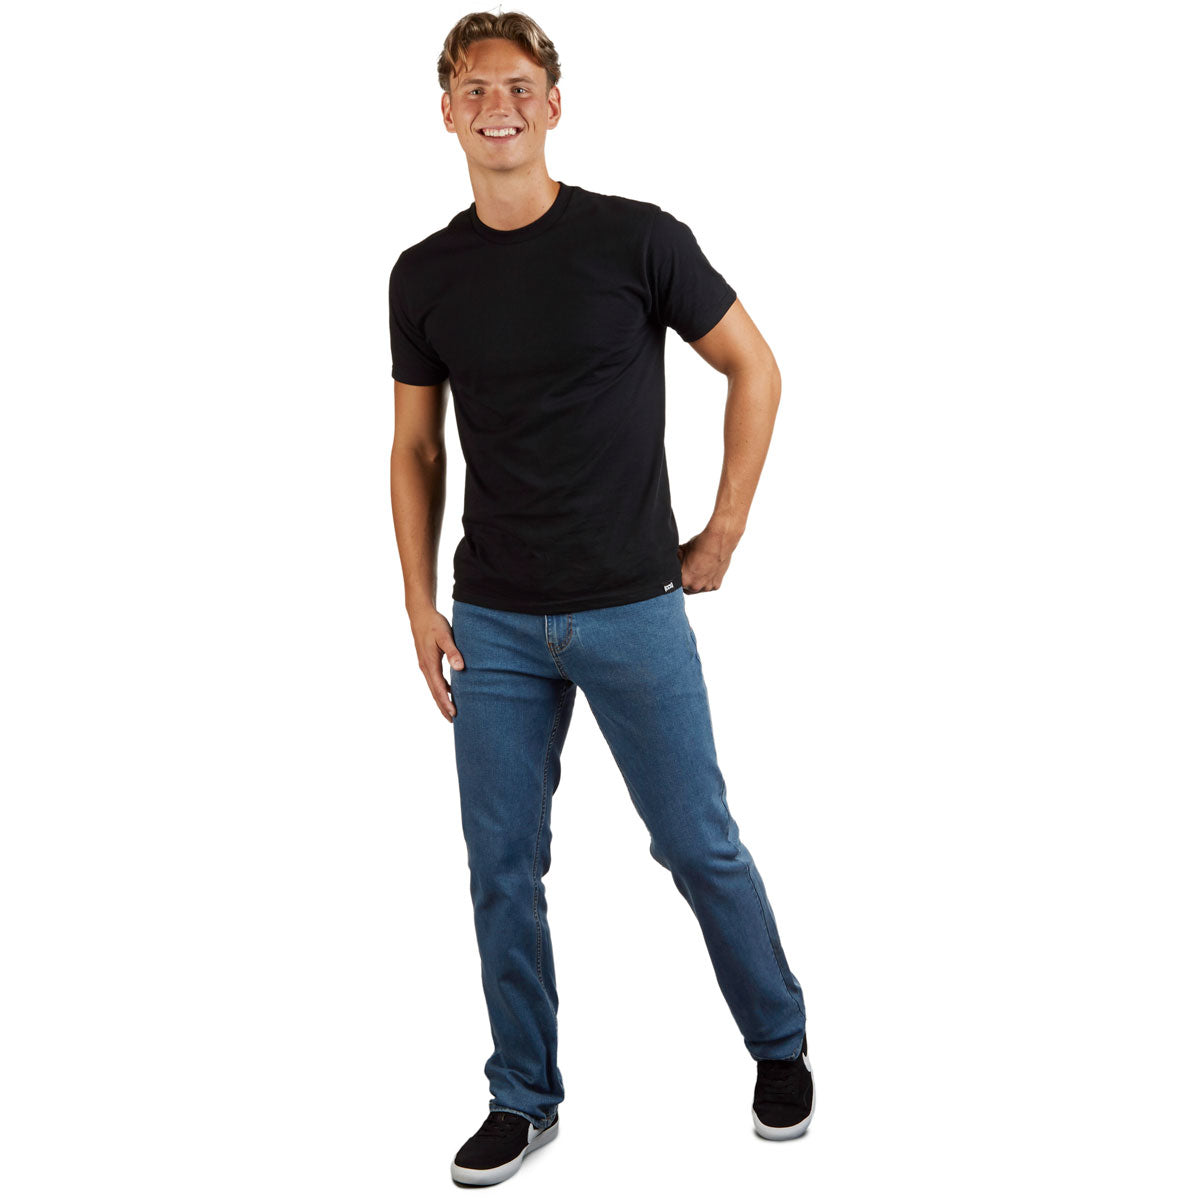 CCS Standard Plus Straight Denim Jeans - New Rinse image 2